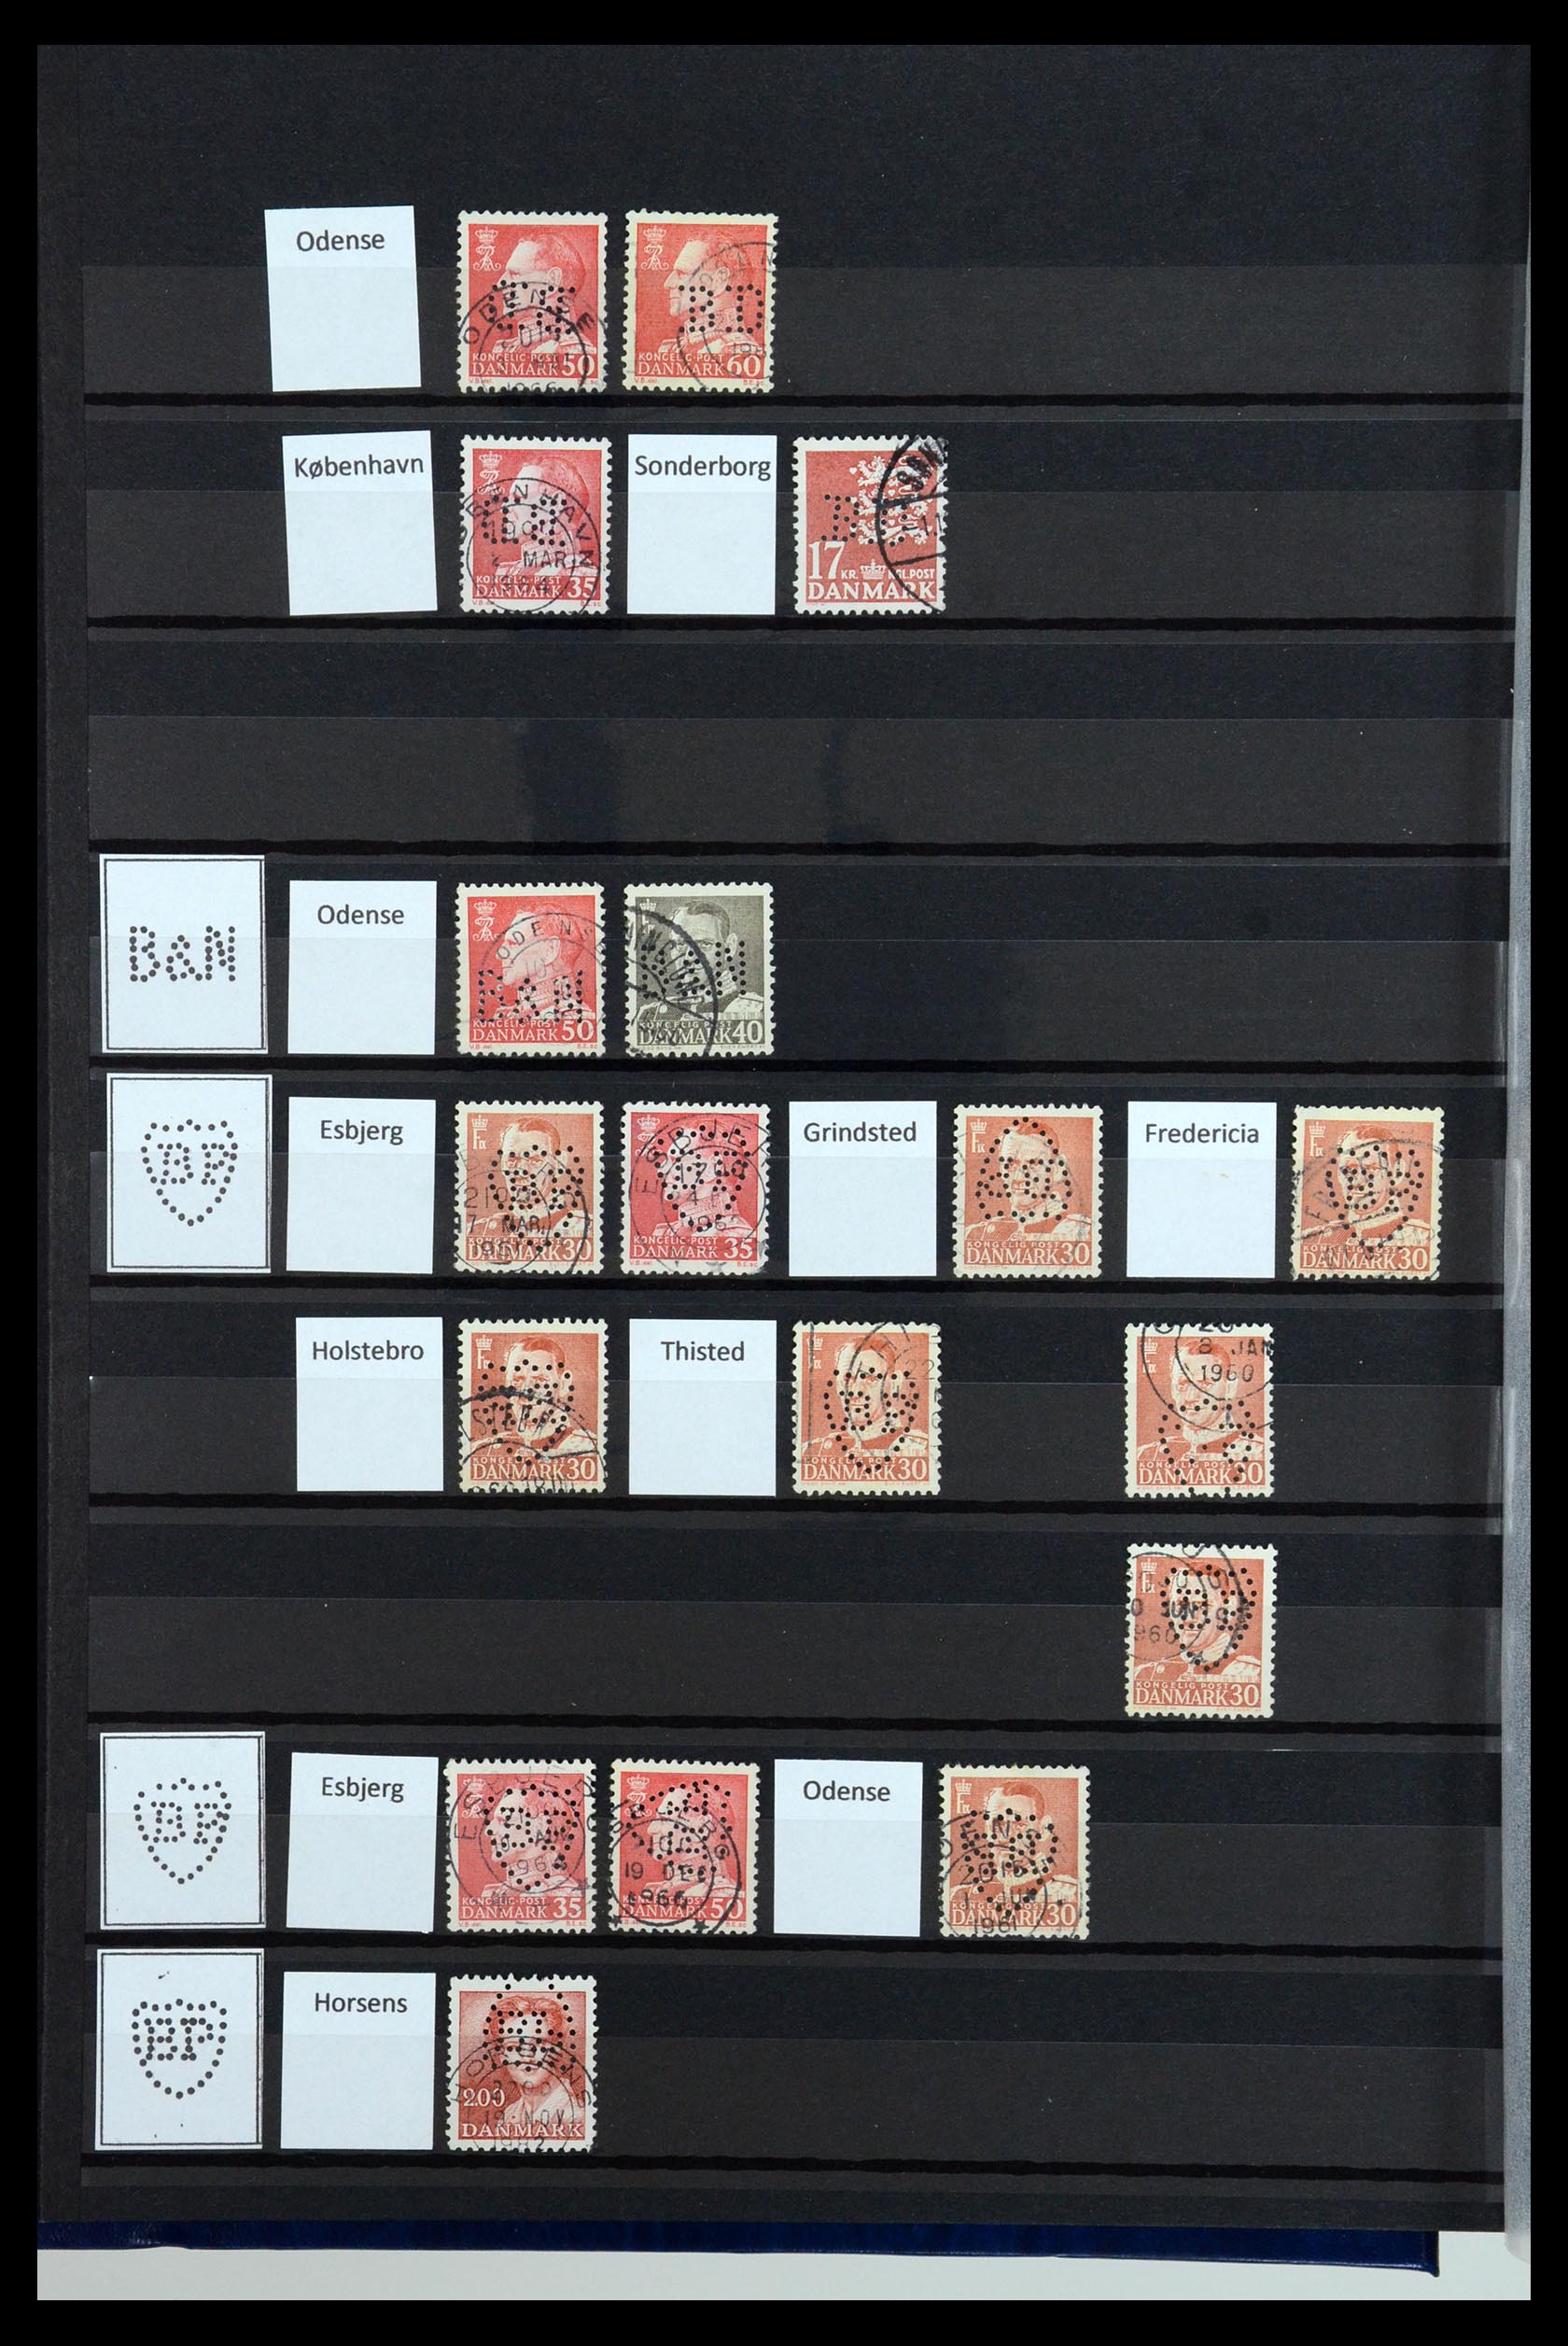 36396 061 - Stamp collection 36396 Denmark perfins.